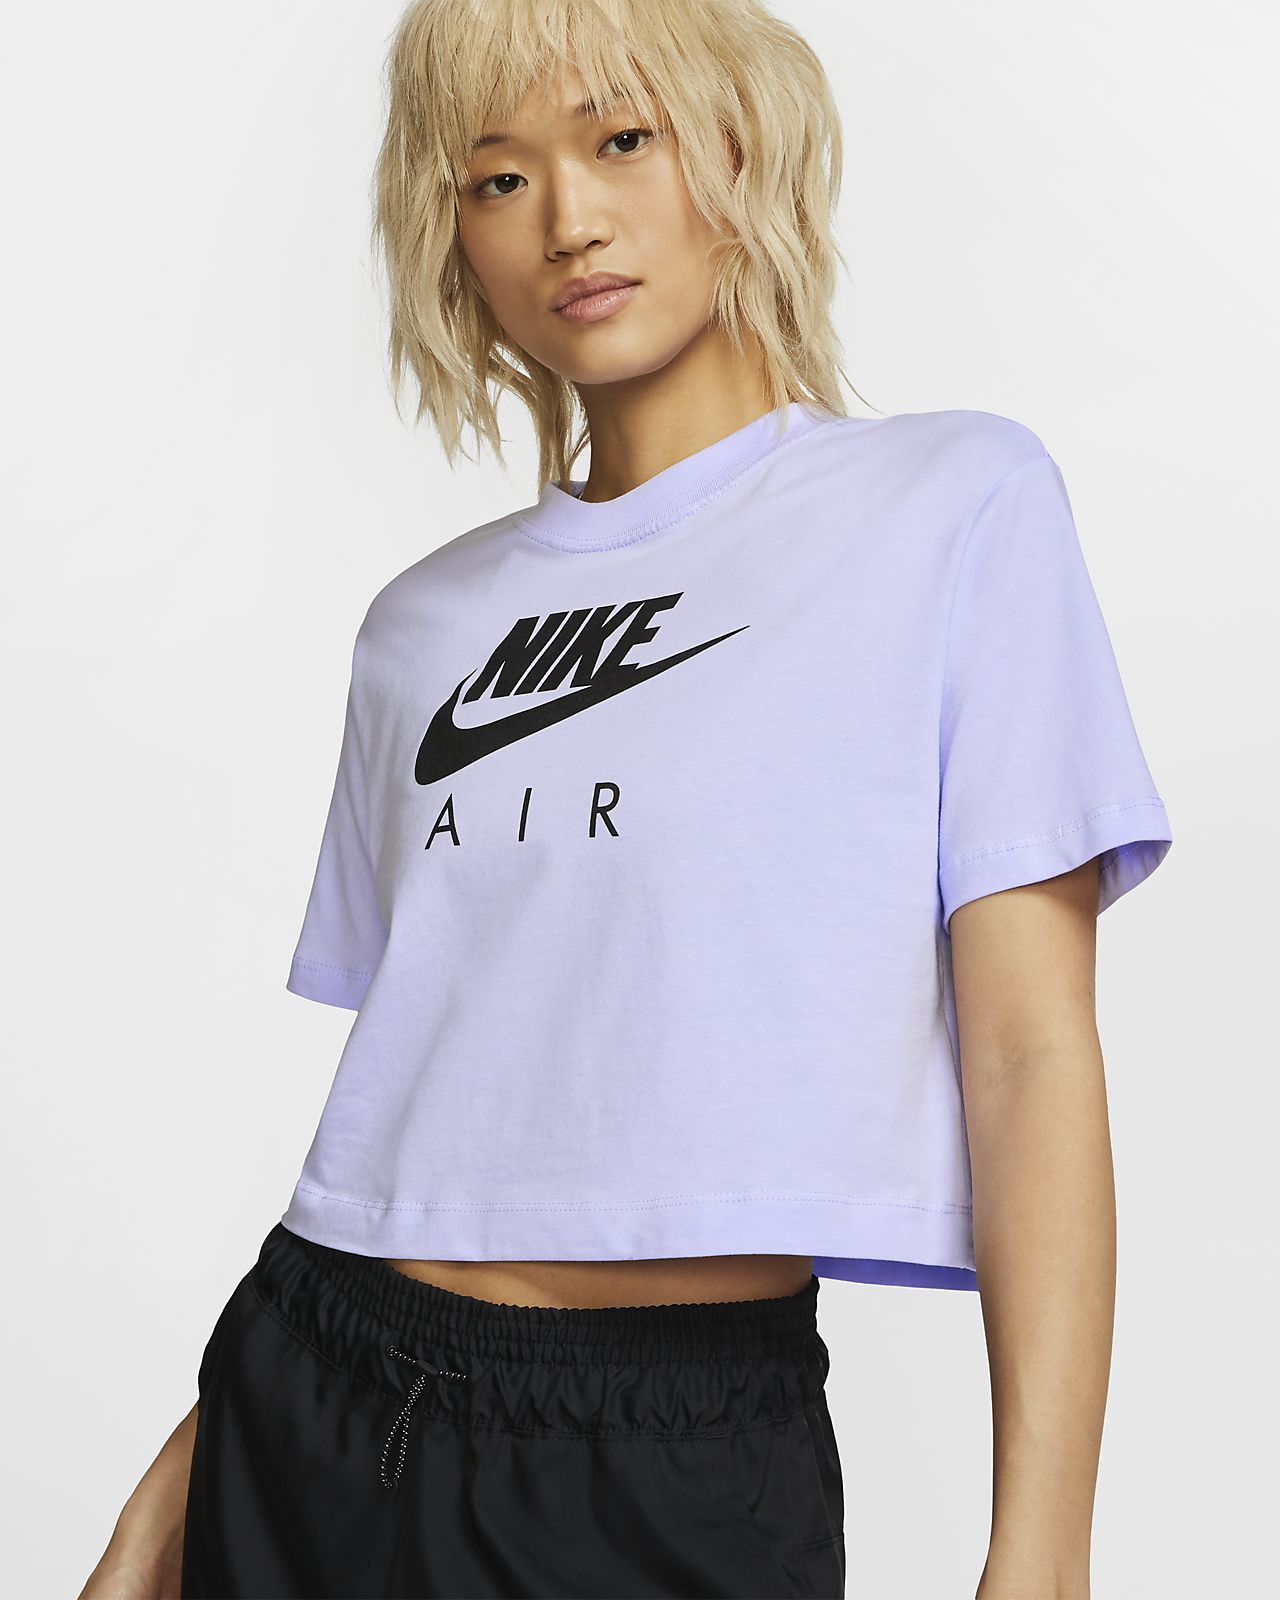 Nike Air Women's Short-Sleeve Top. Nike EG